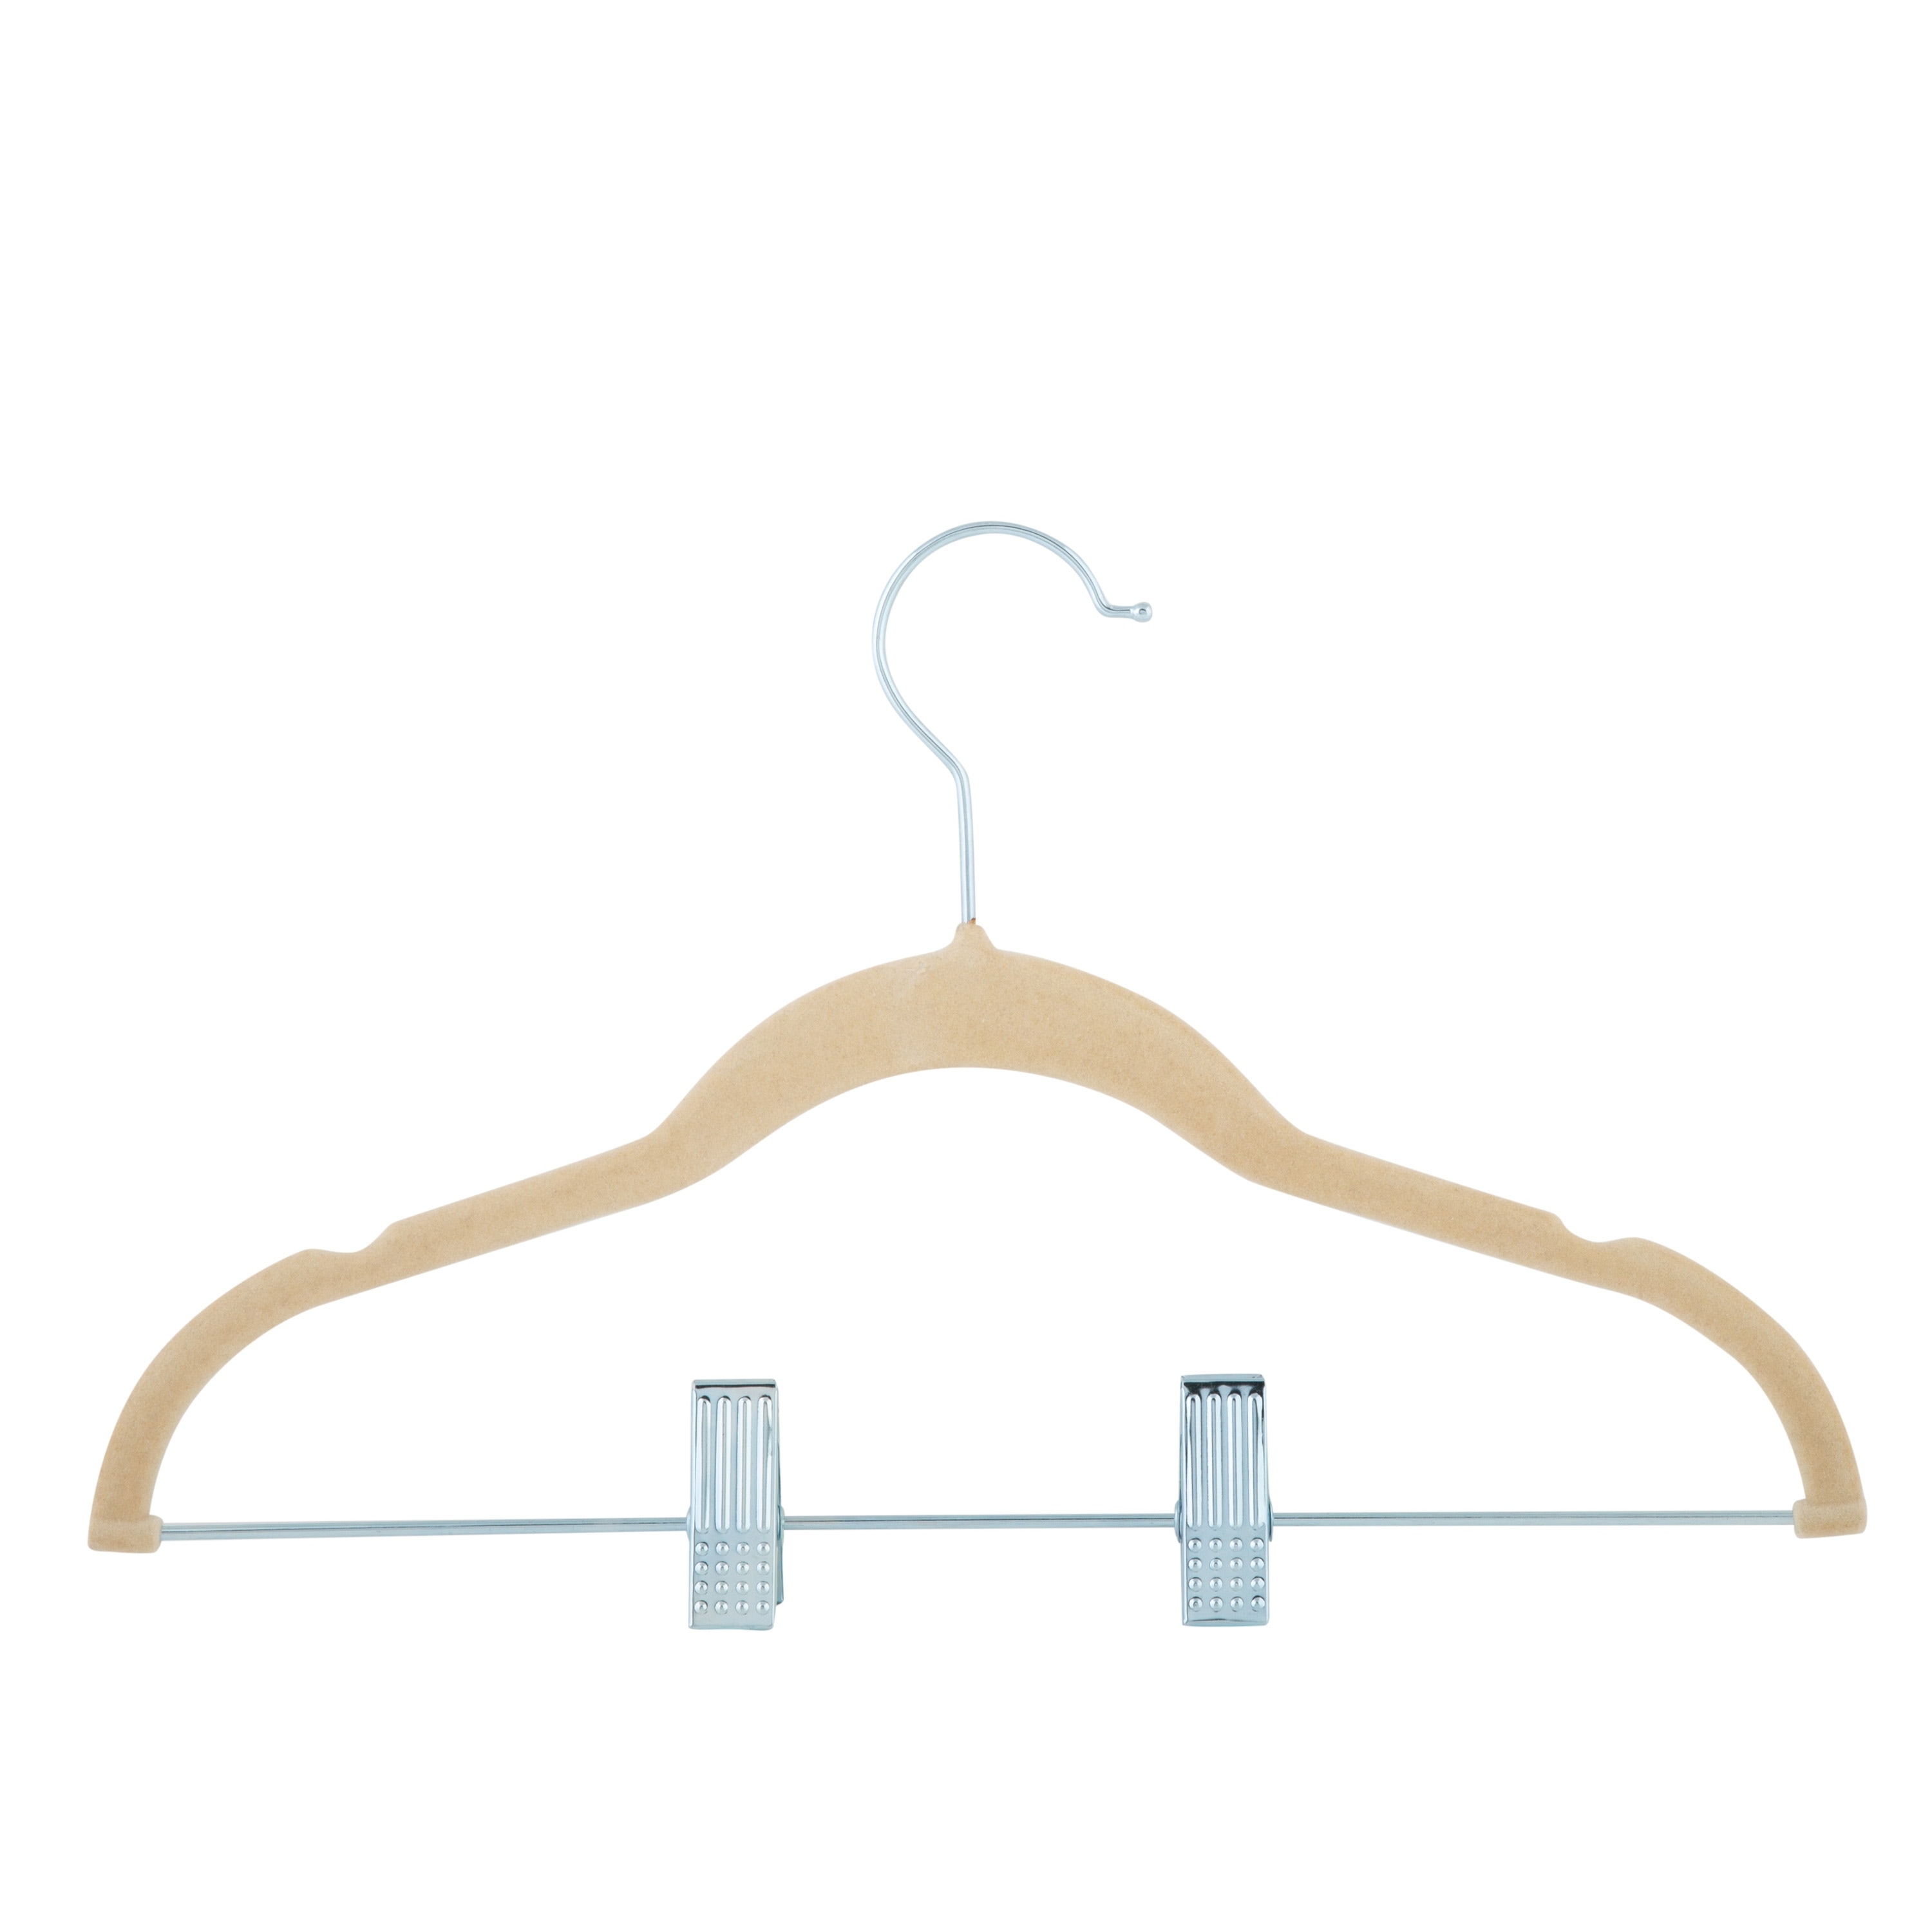 Simplify 24 Pack Extra Wide Velvet Coat Hangers in Ivory